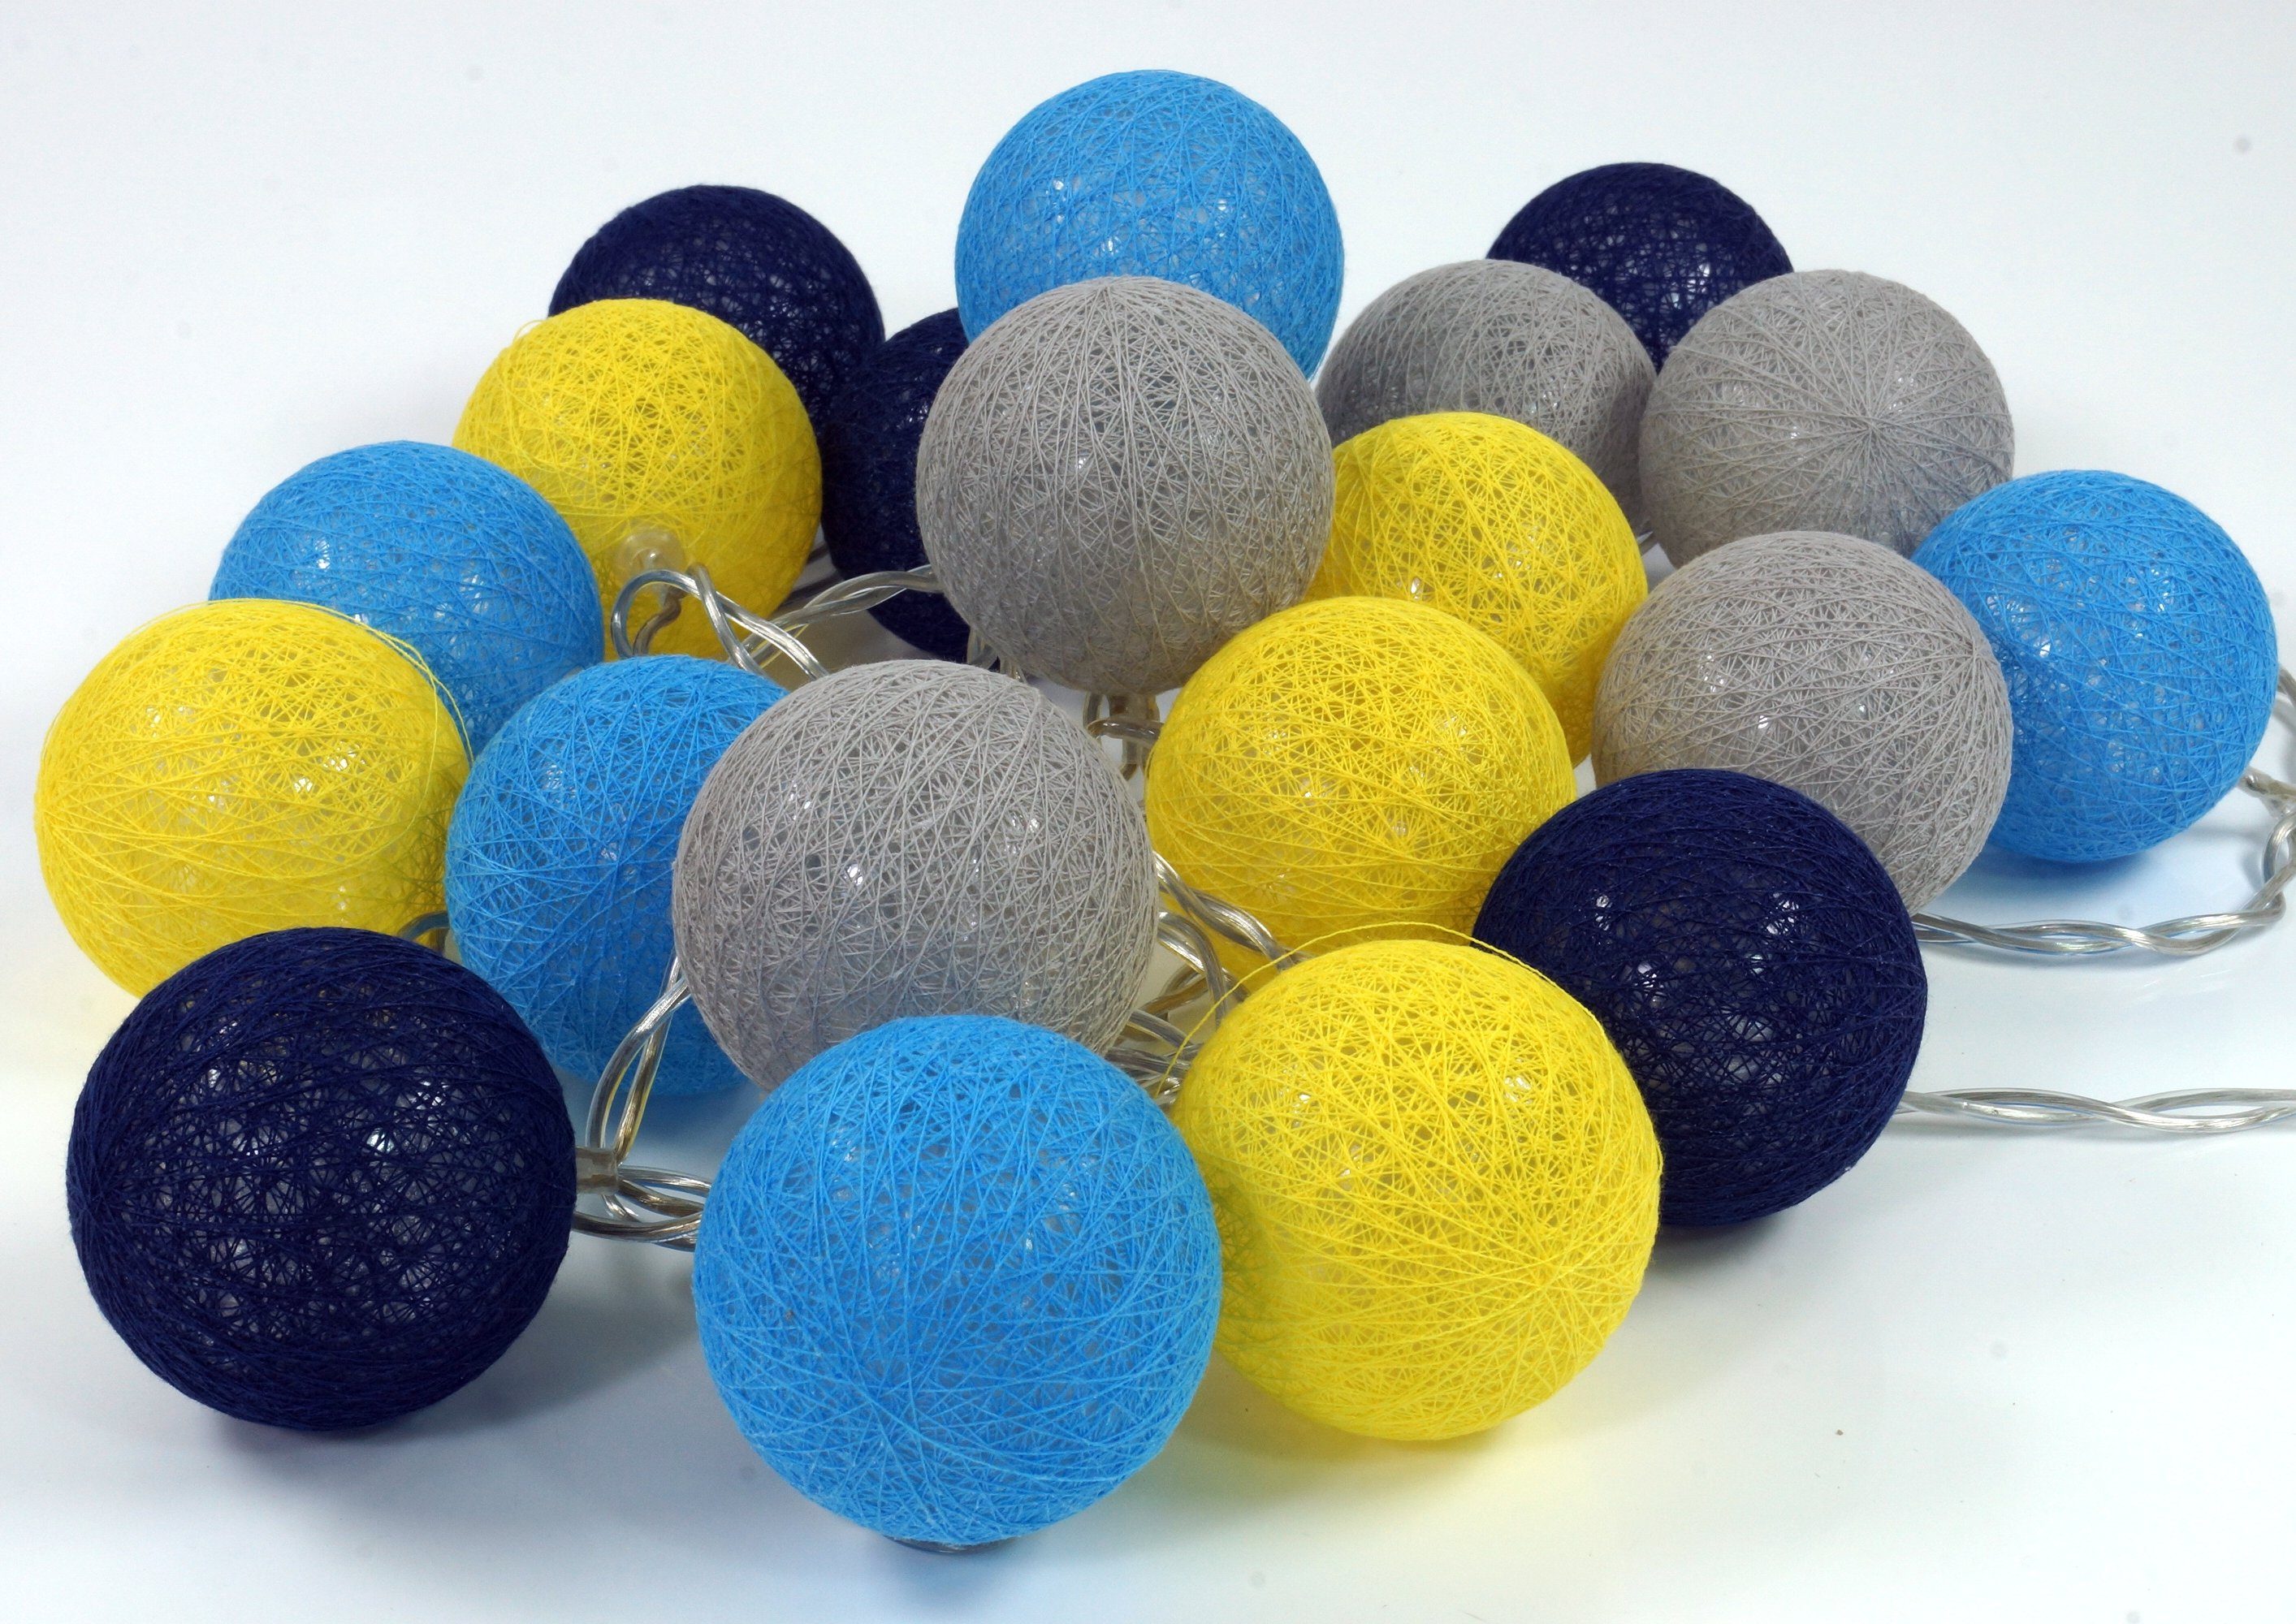 Guru-Shop Lichterkette, LED-Lichterkette Ball LED Stoff Kugel grau/blau/gelb Lampion..